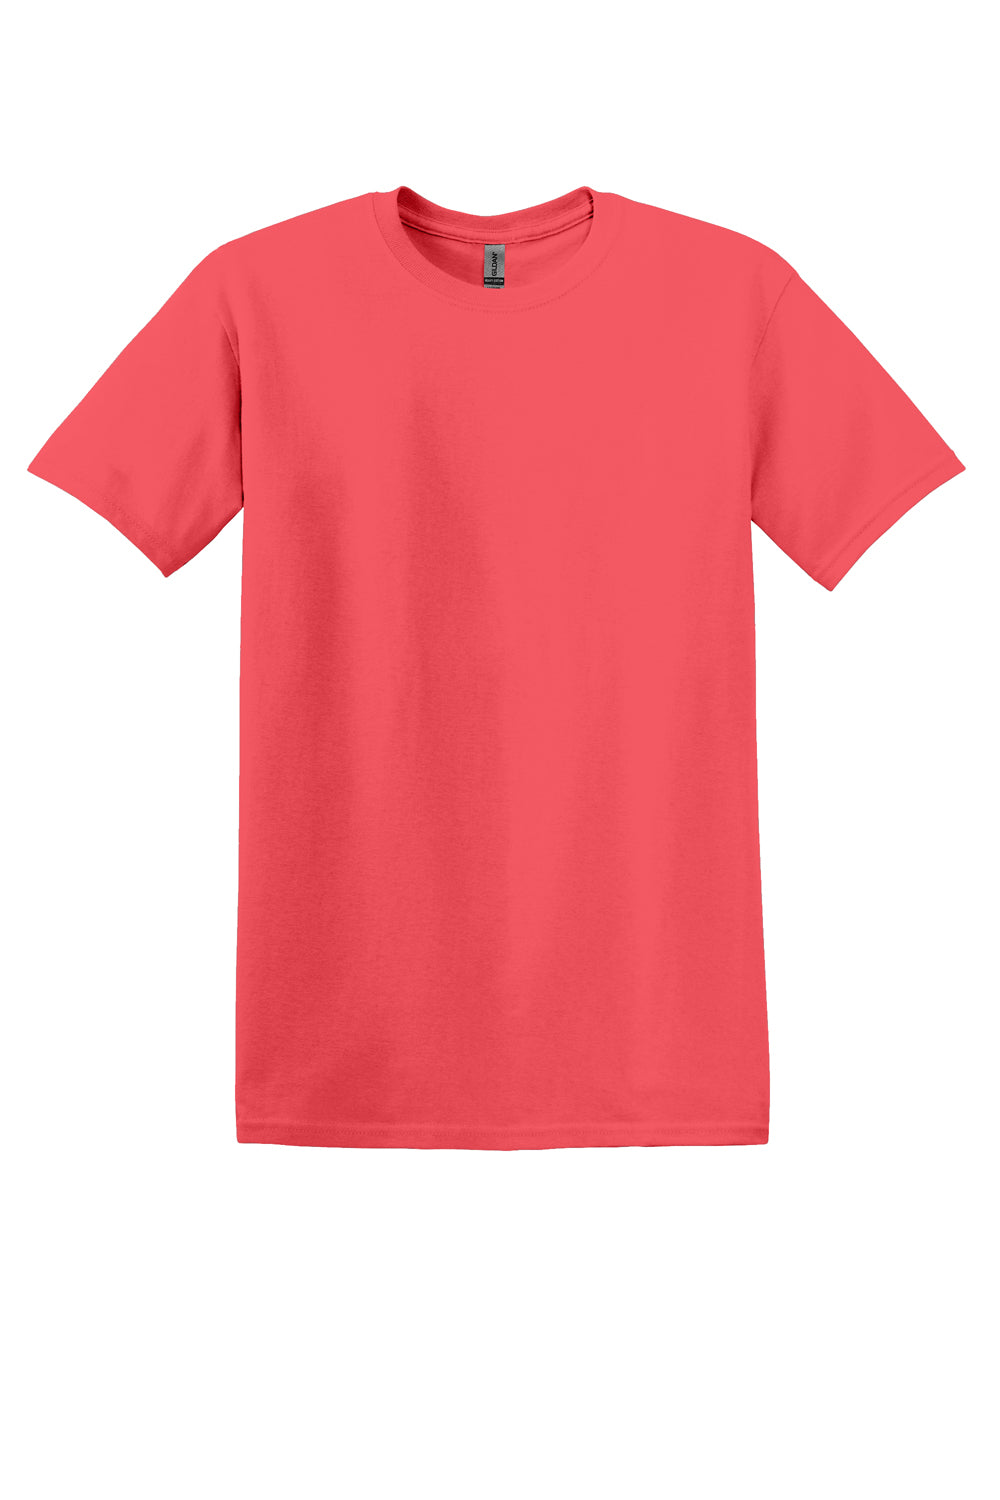 Gildan Mens Softstyle Short Sleeve Crewneck T-Shirt Coral Silk Pink Flat Front